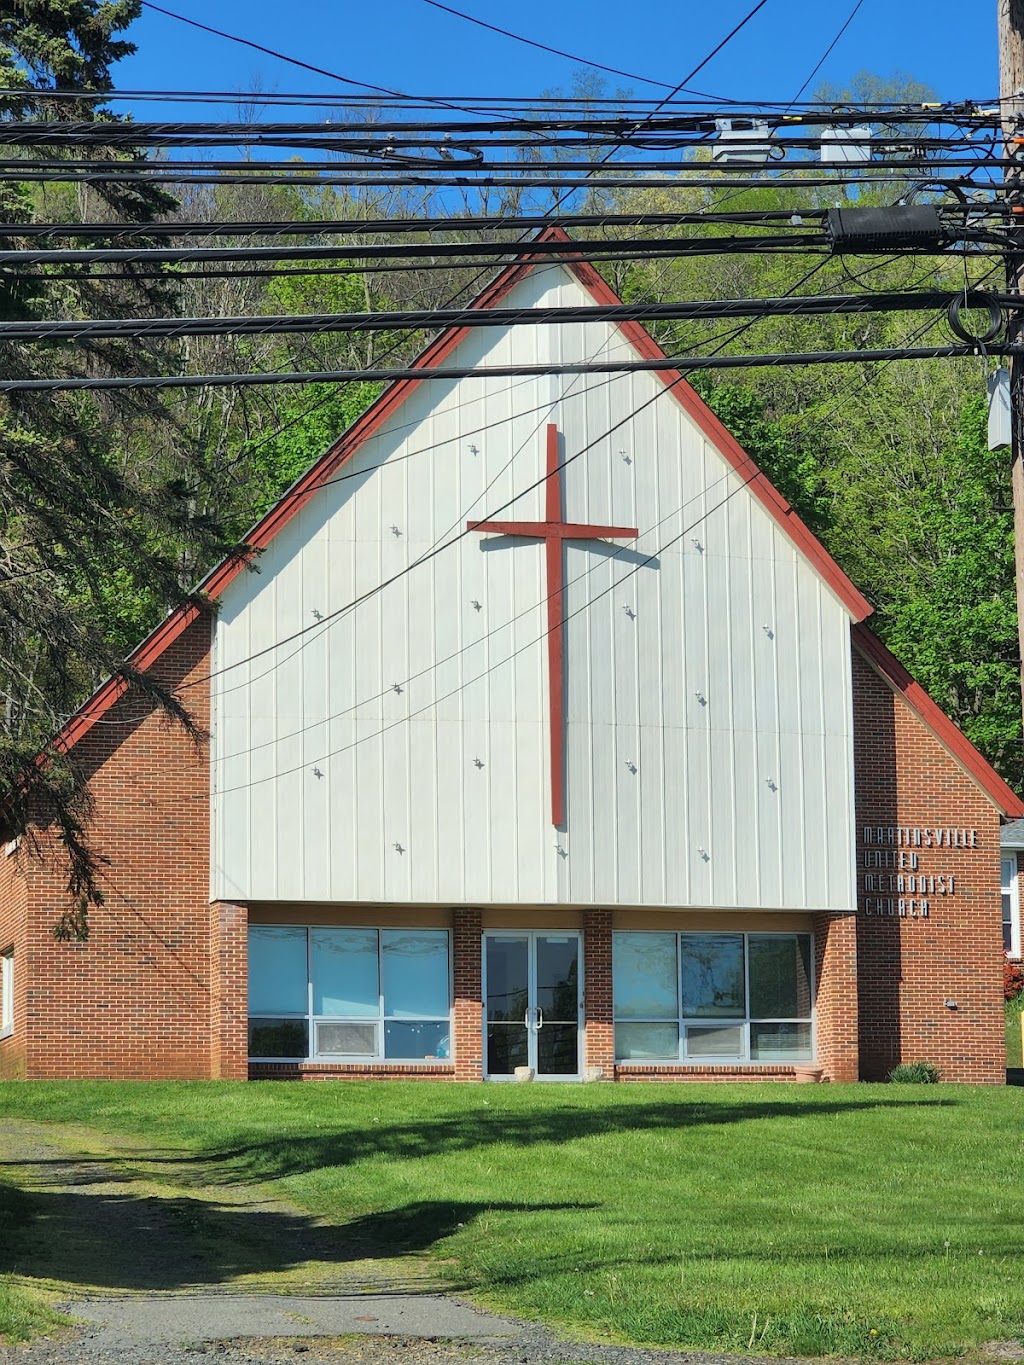 Bountiful United Methodist Church of Martinsville | 1949 Washington Valley Rd, Martinsville, NJ 08836 | Phone: (732) 356-1326